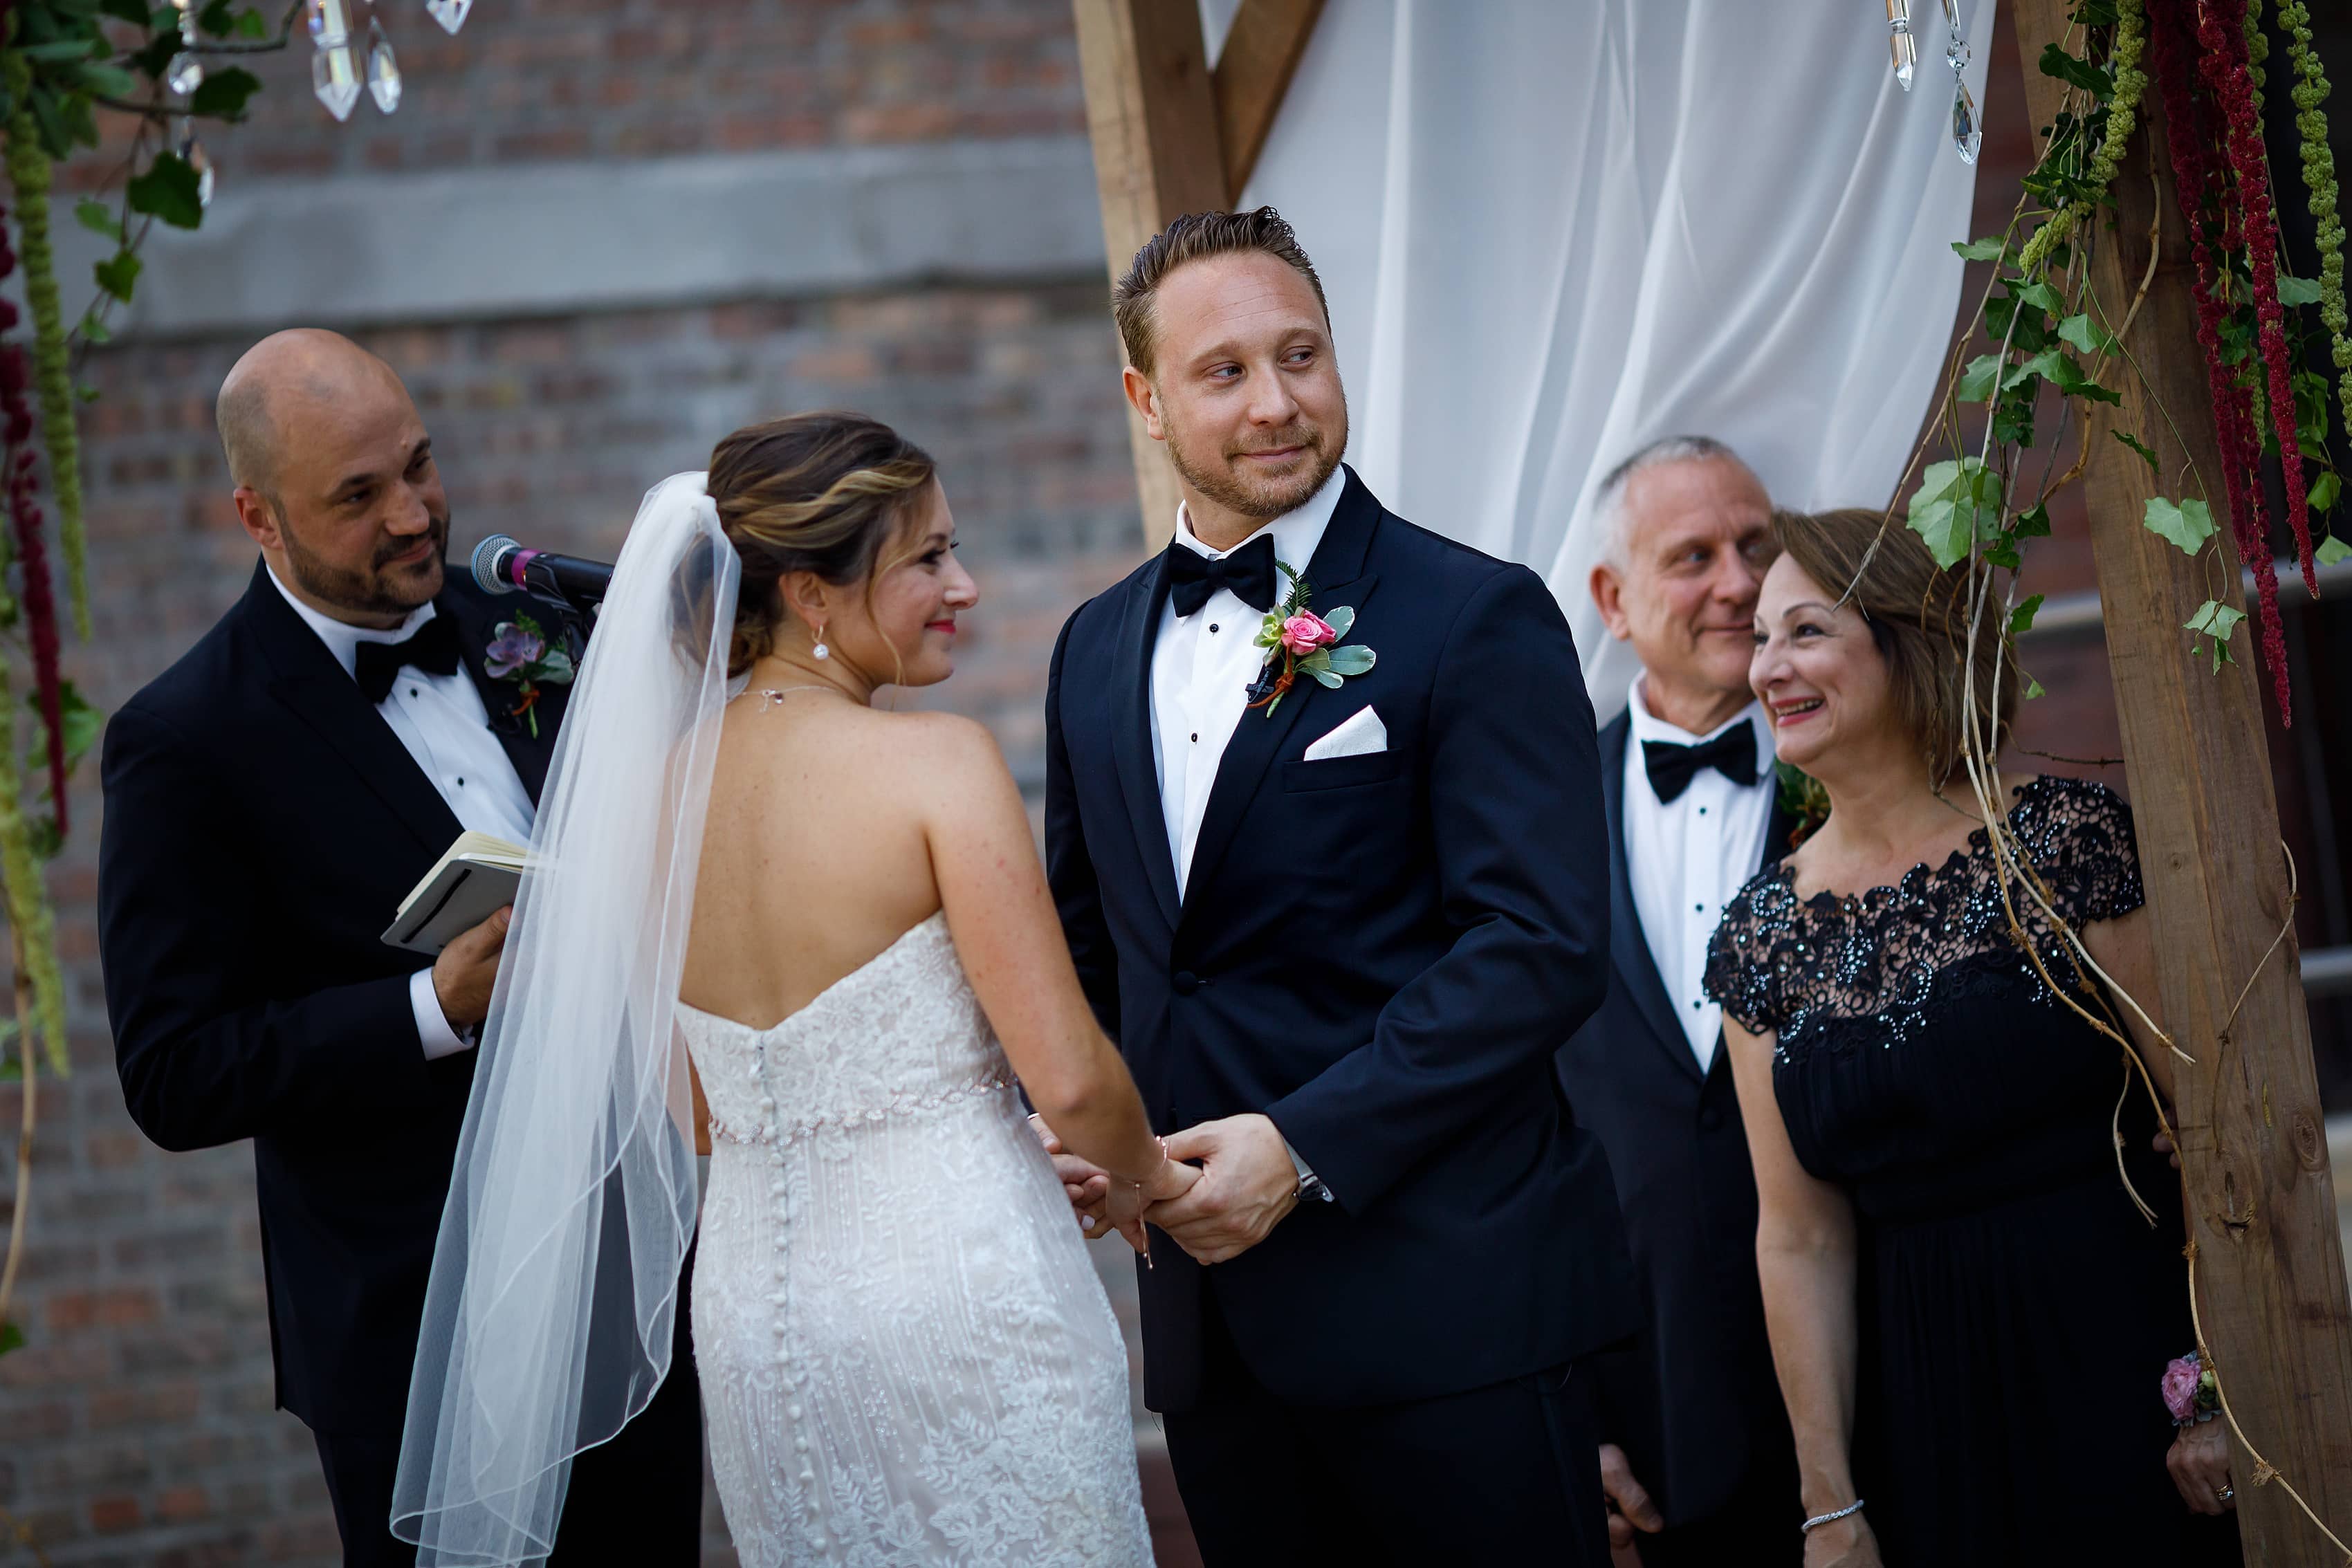 bride and groom smile during wedding ceremony at Bridgeport Art Center Sculpture Garden in Chicago